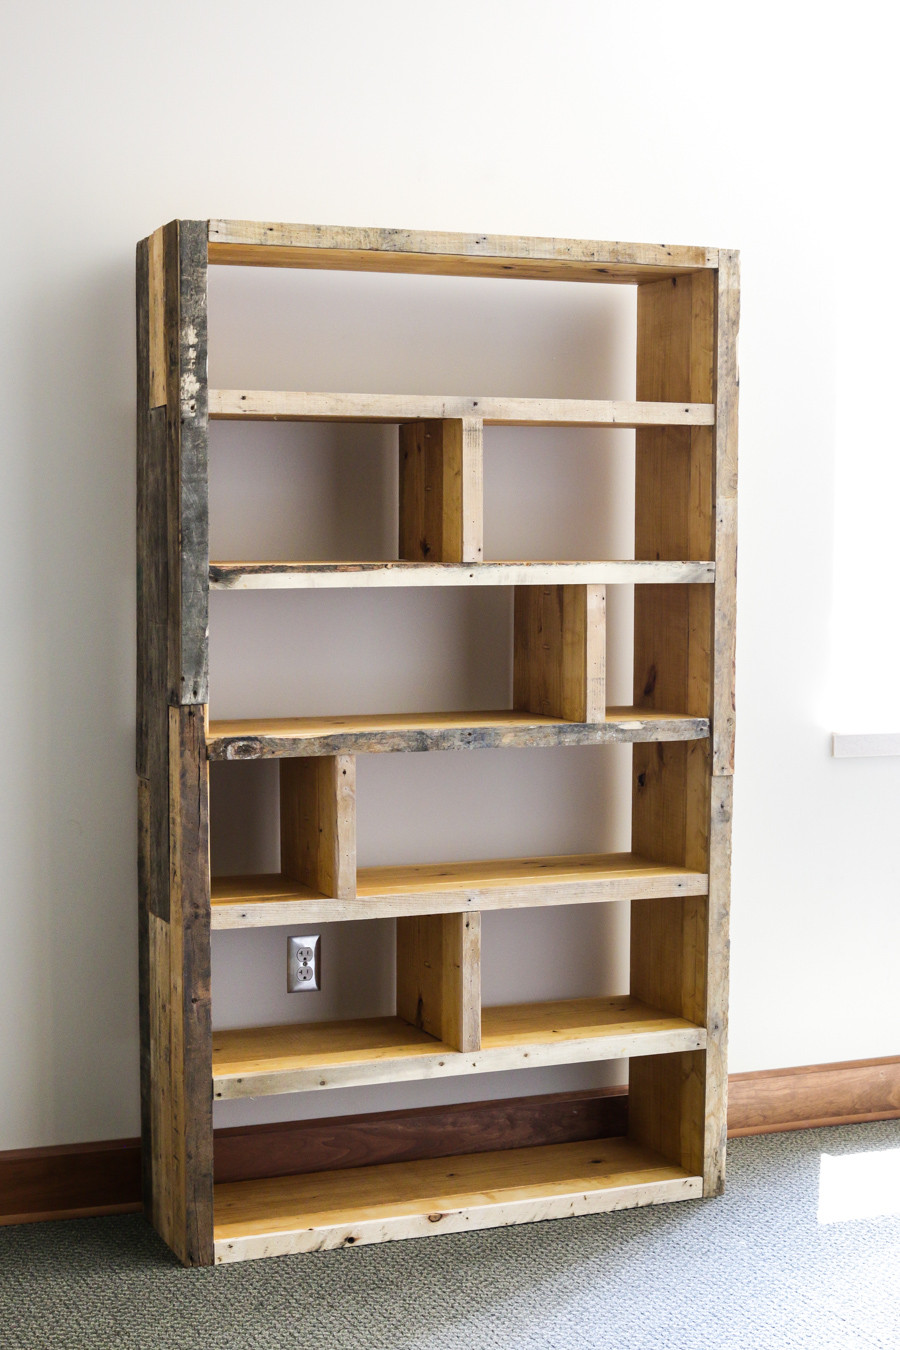 Best ideas about DIY Wooden Bookshelves
. Save or Pin DIY Rustic Pallet Bookshelf Now.